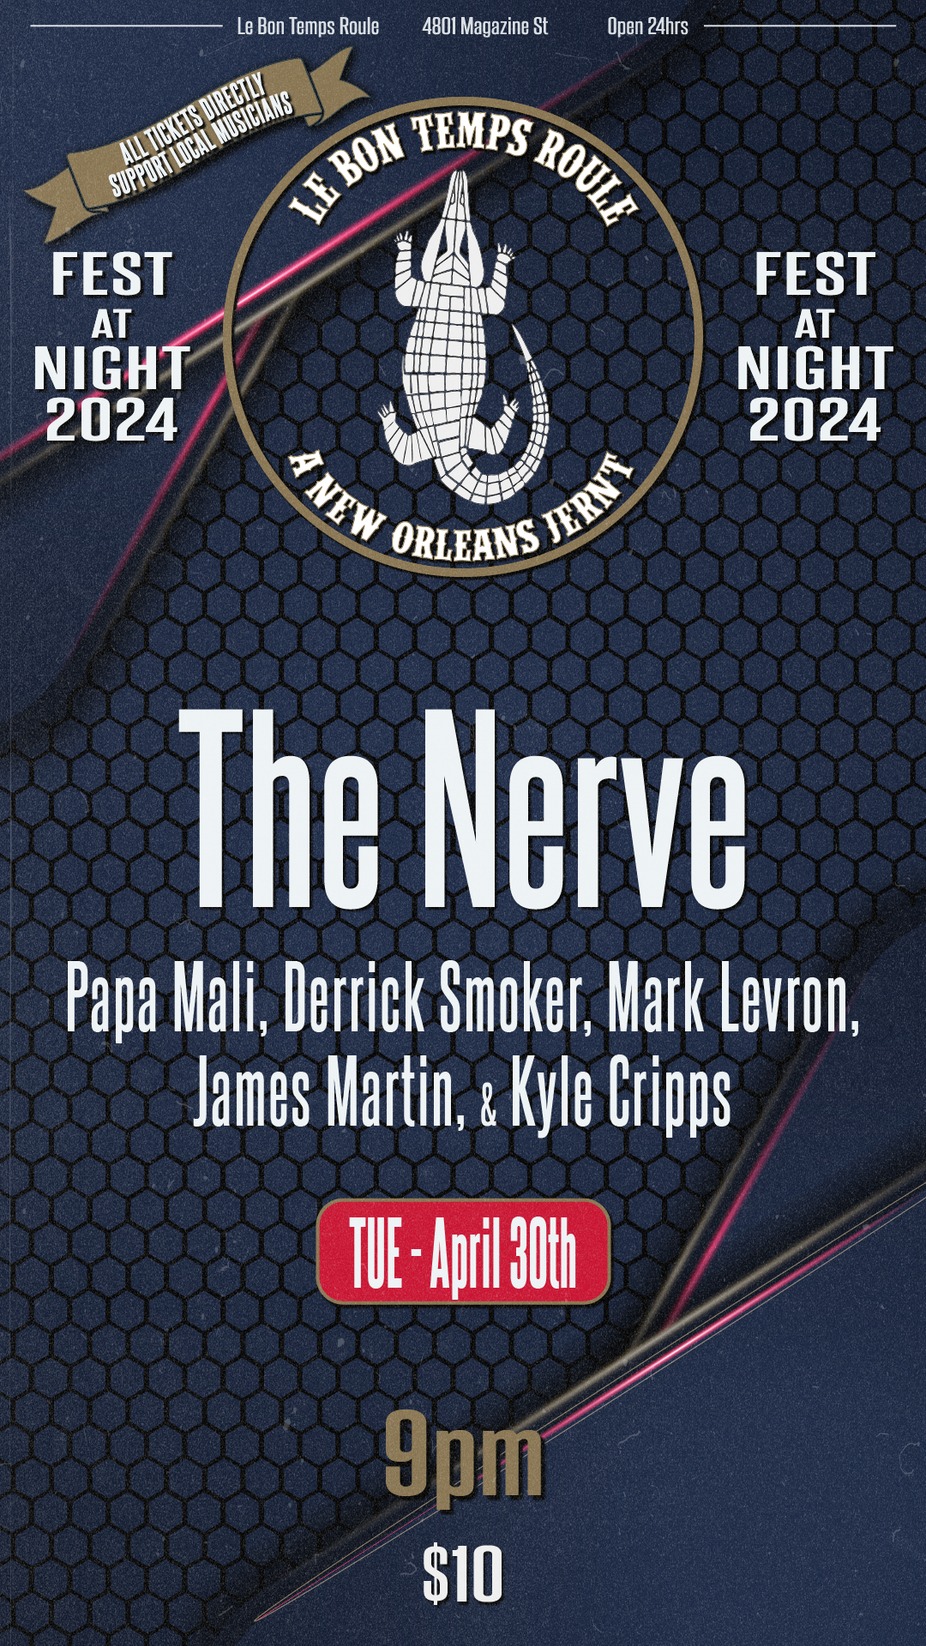 The Nerve event photo